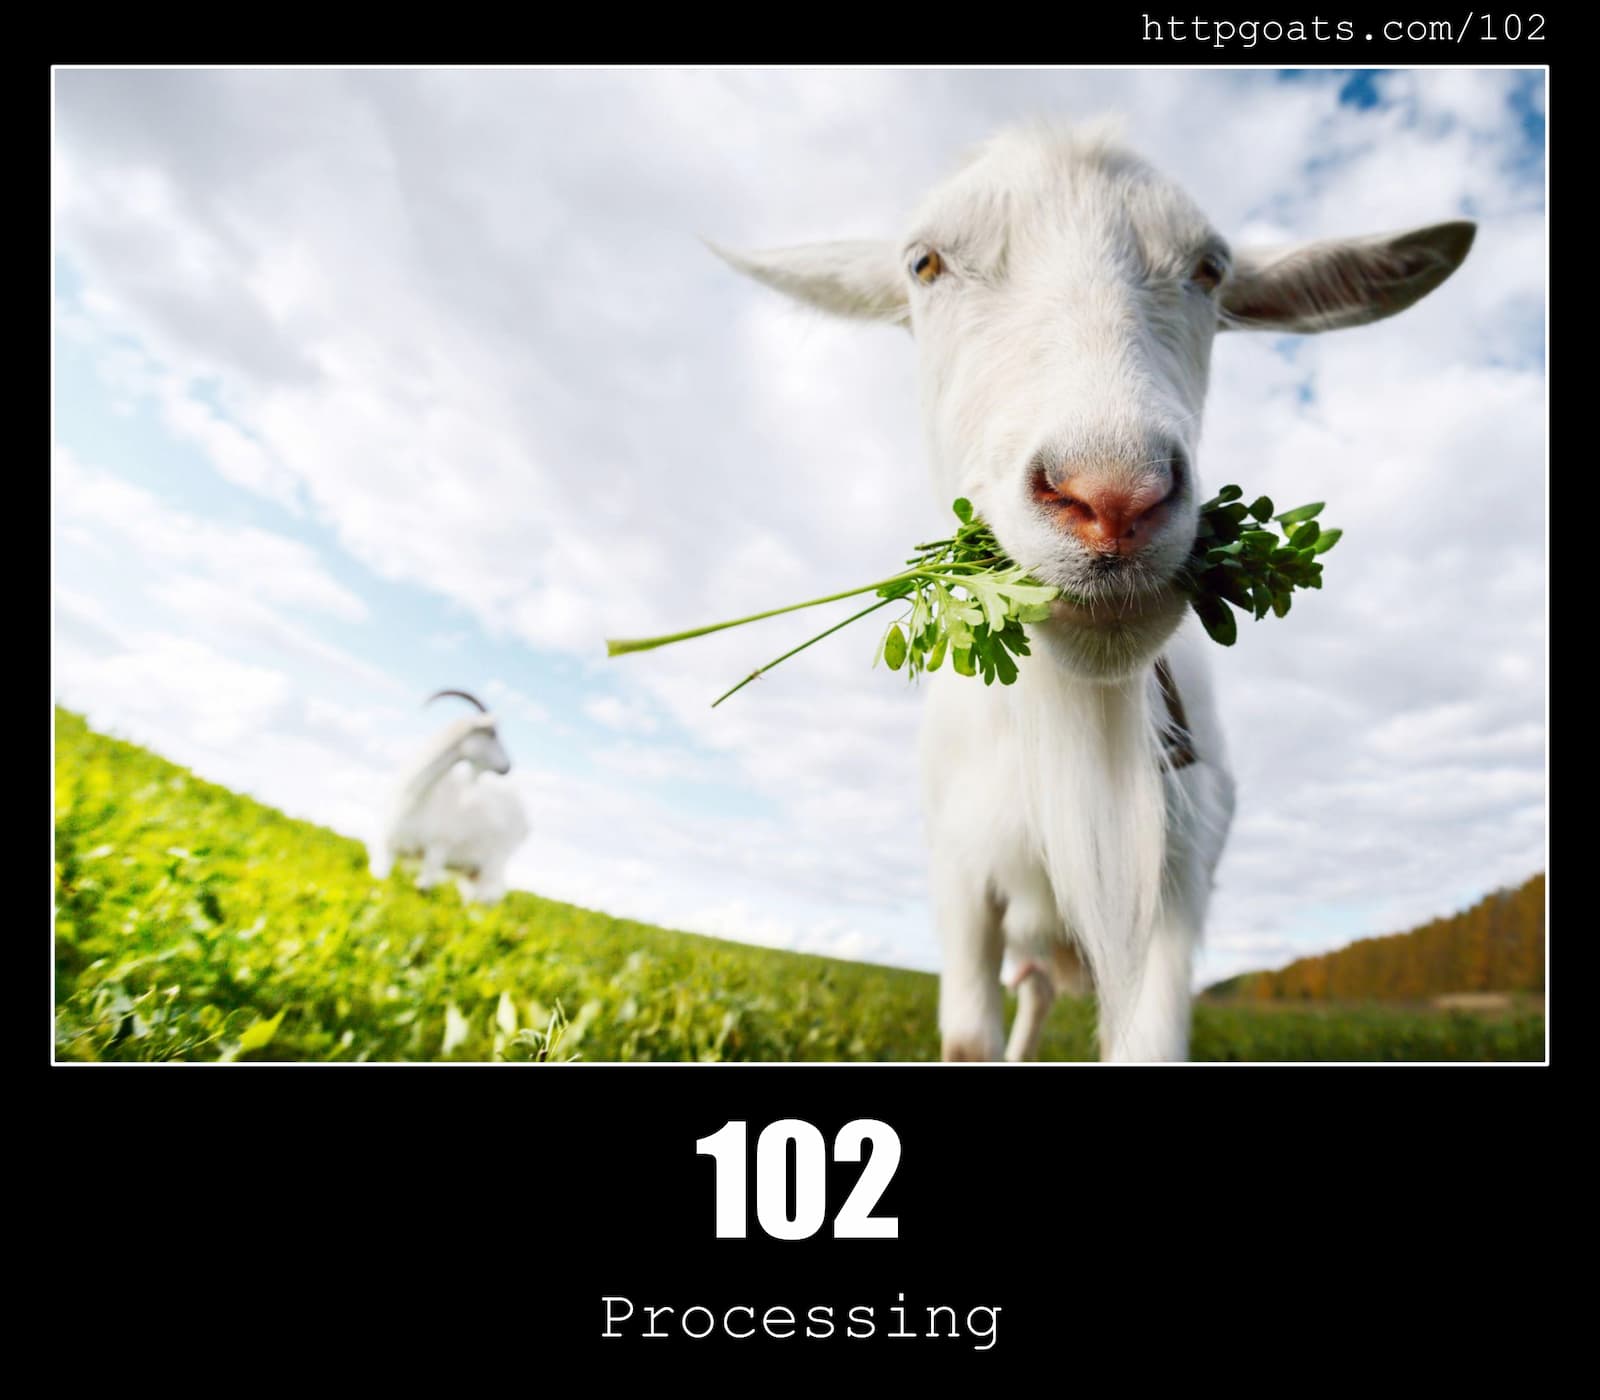 HTTP Status Code 102 Processing & Goats